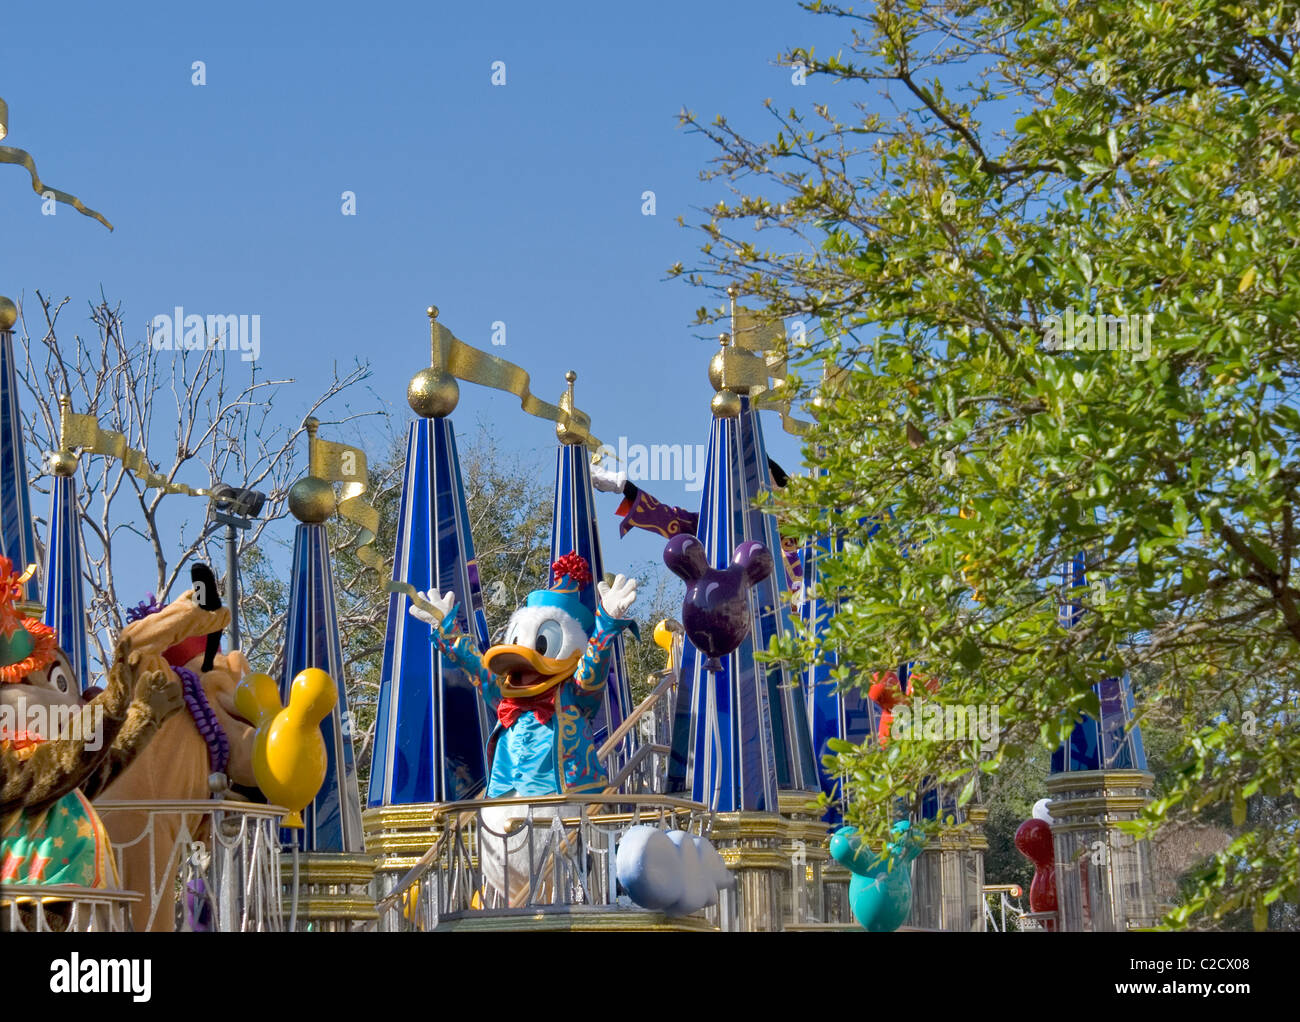 Donald Duck on parade float, Walt Disney World resort, Orlando, Florida Stock Photo